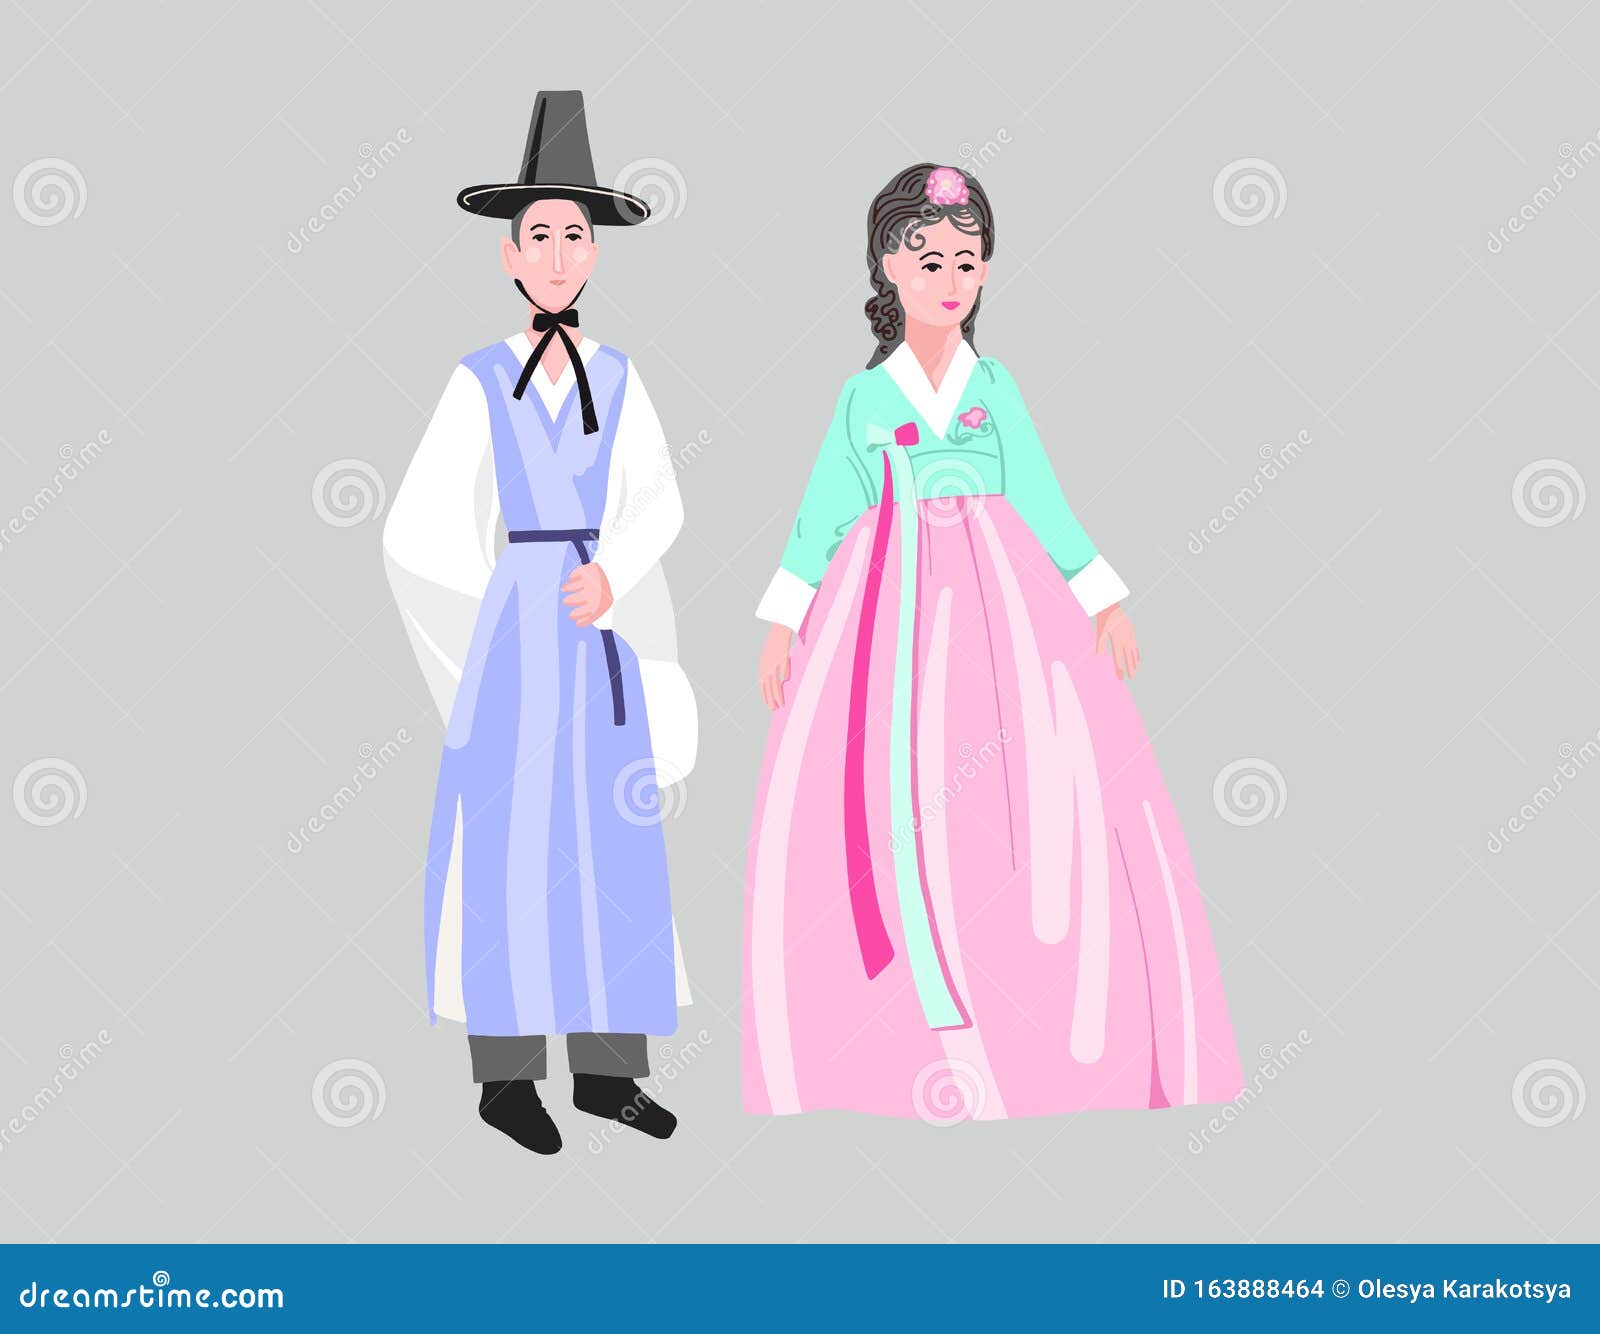 Korean Outfits Ideas|High Low Dress👗|Korean Party Dress|2022 New Dress  Design|Korean one Piece Dress - YouTube